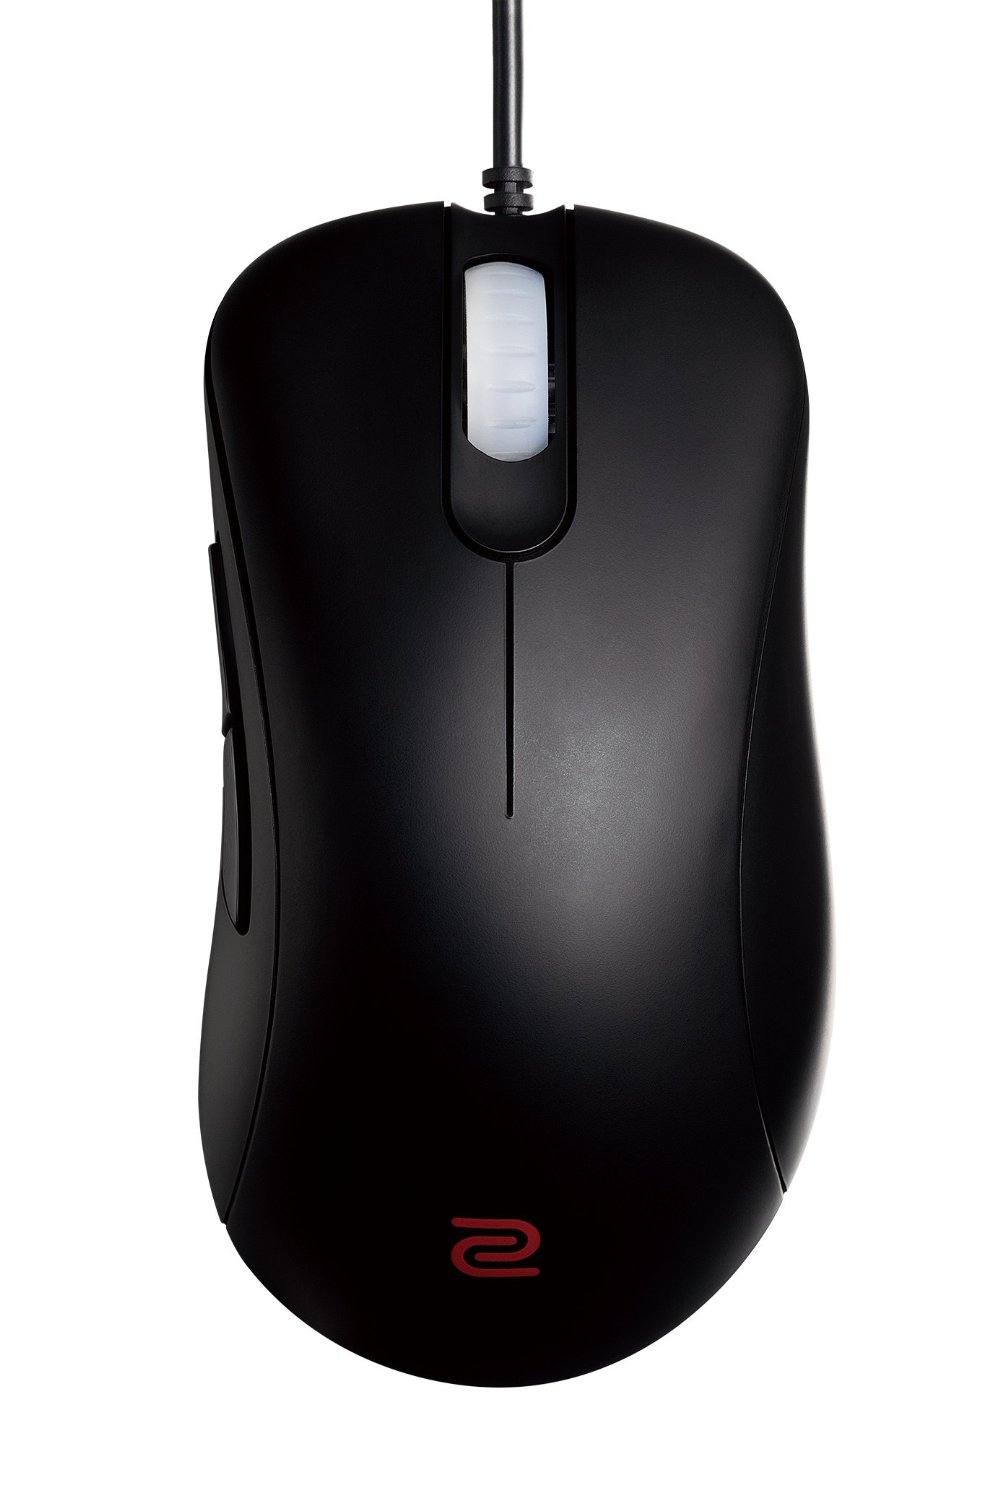 zowie gear ergonomic optical gaming mouse (ec2-a)